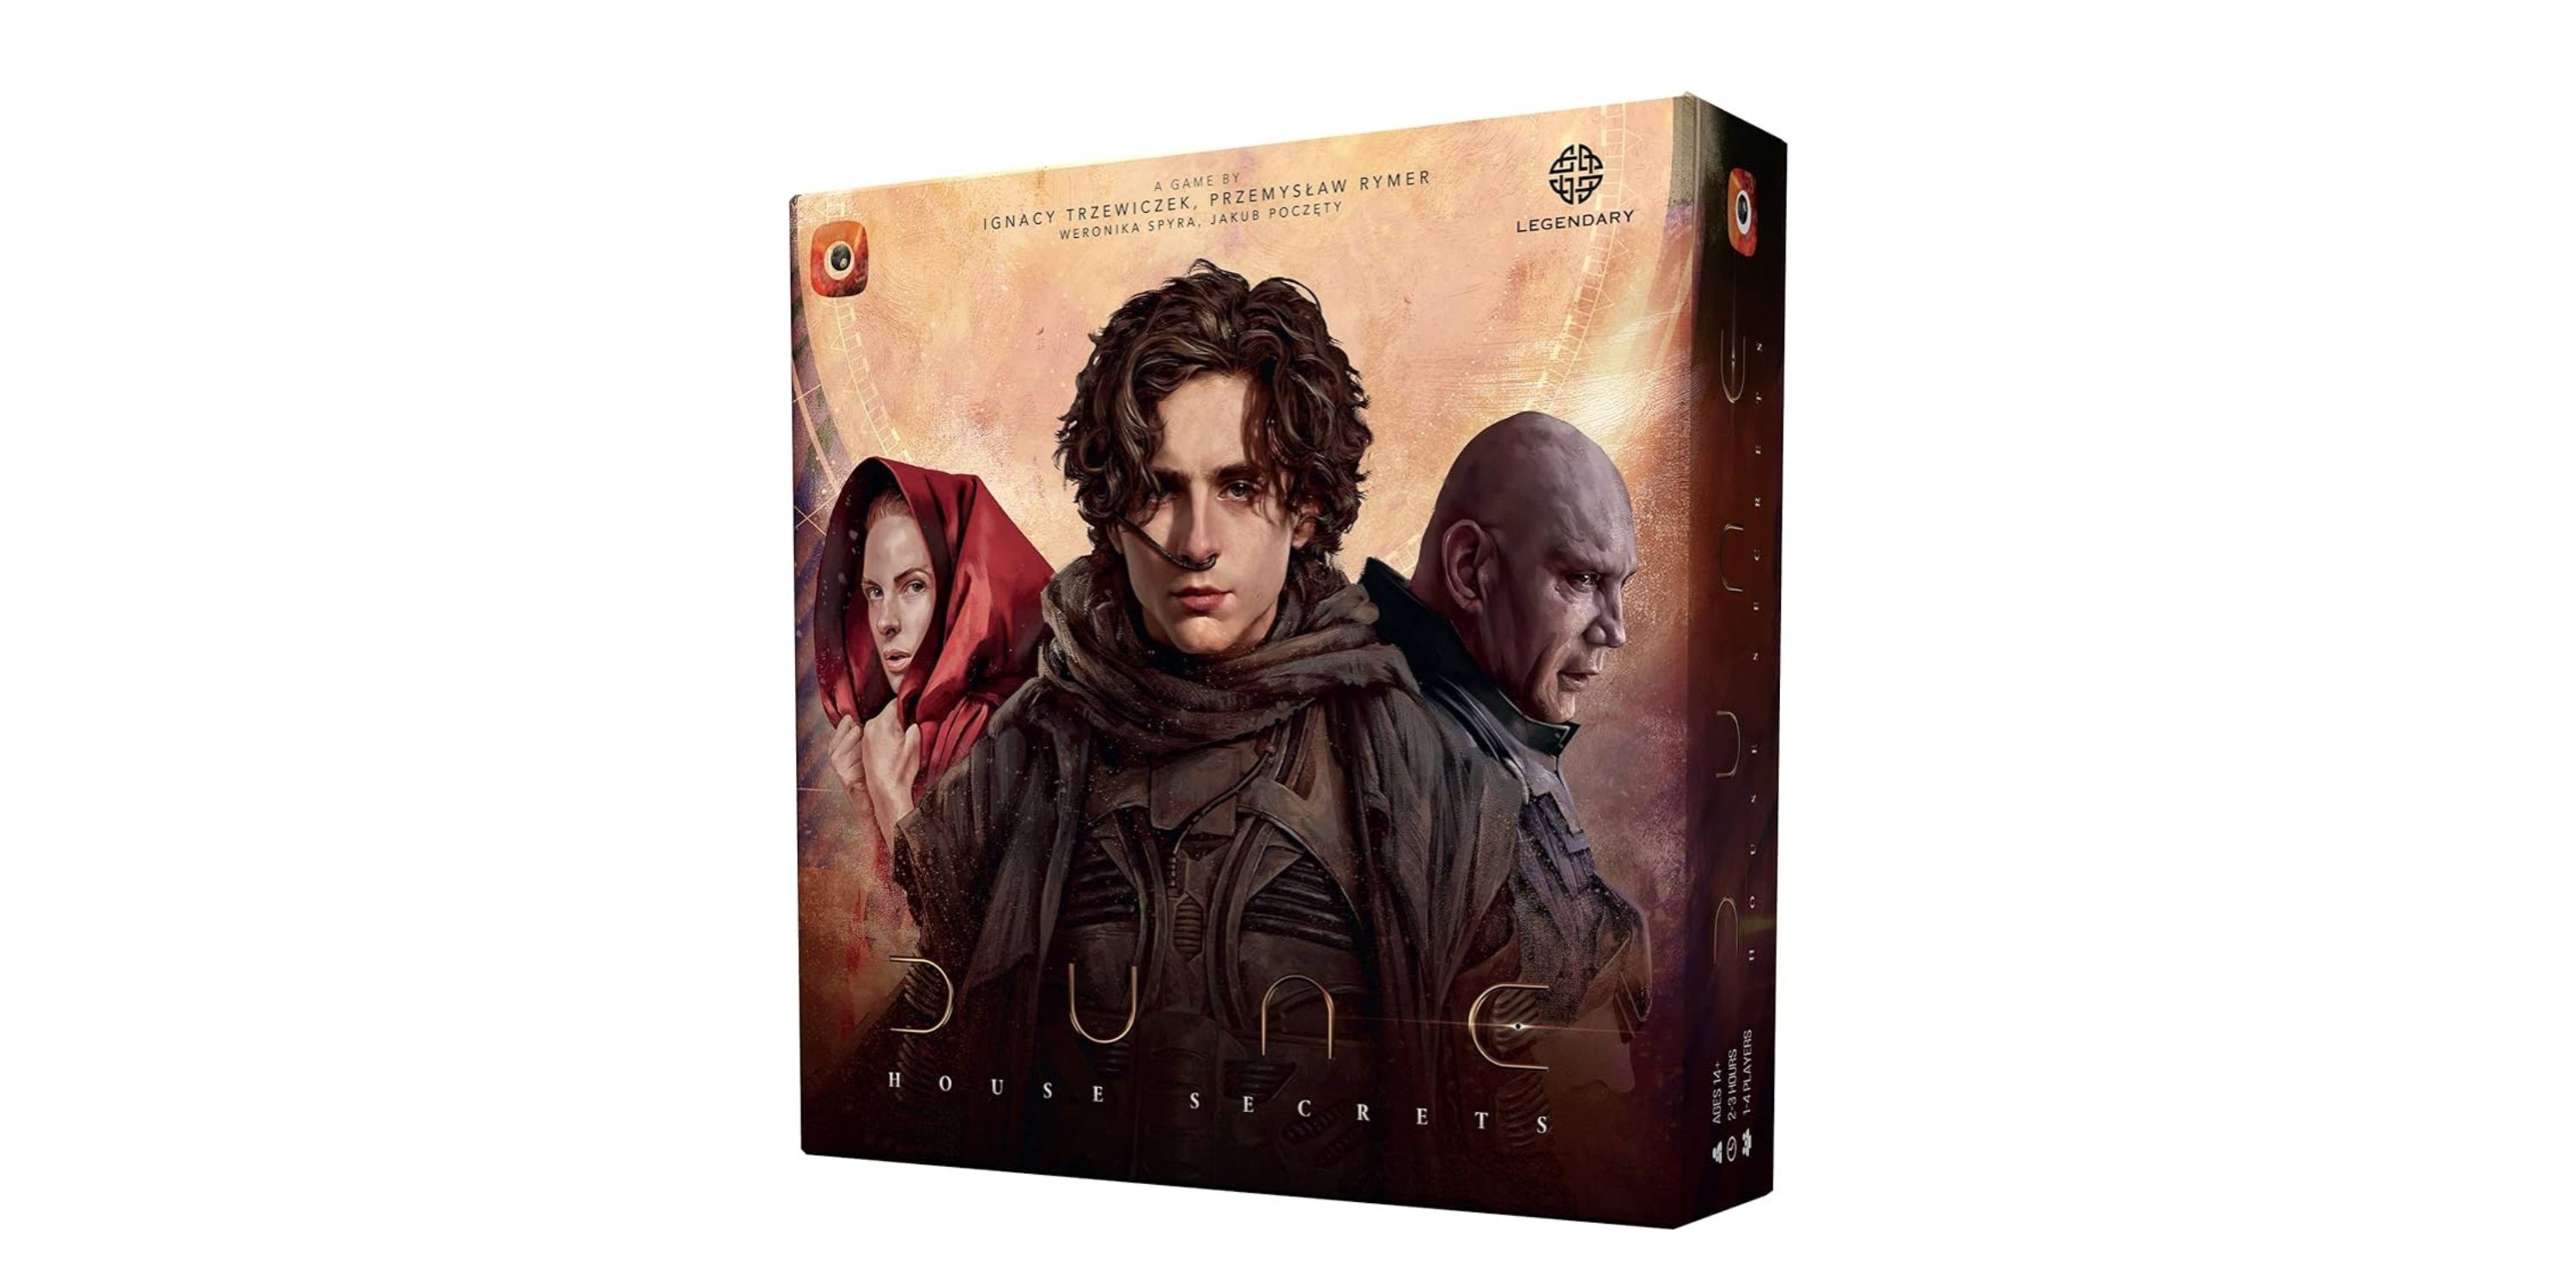 Dune: House Secrets - Box